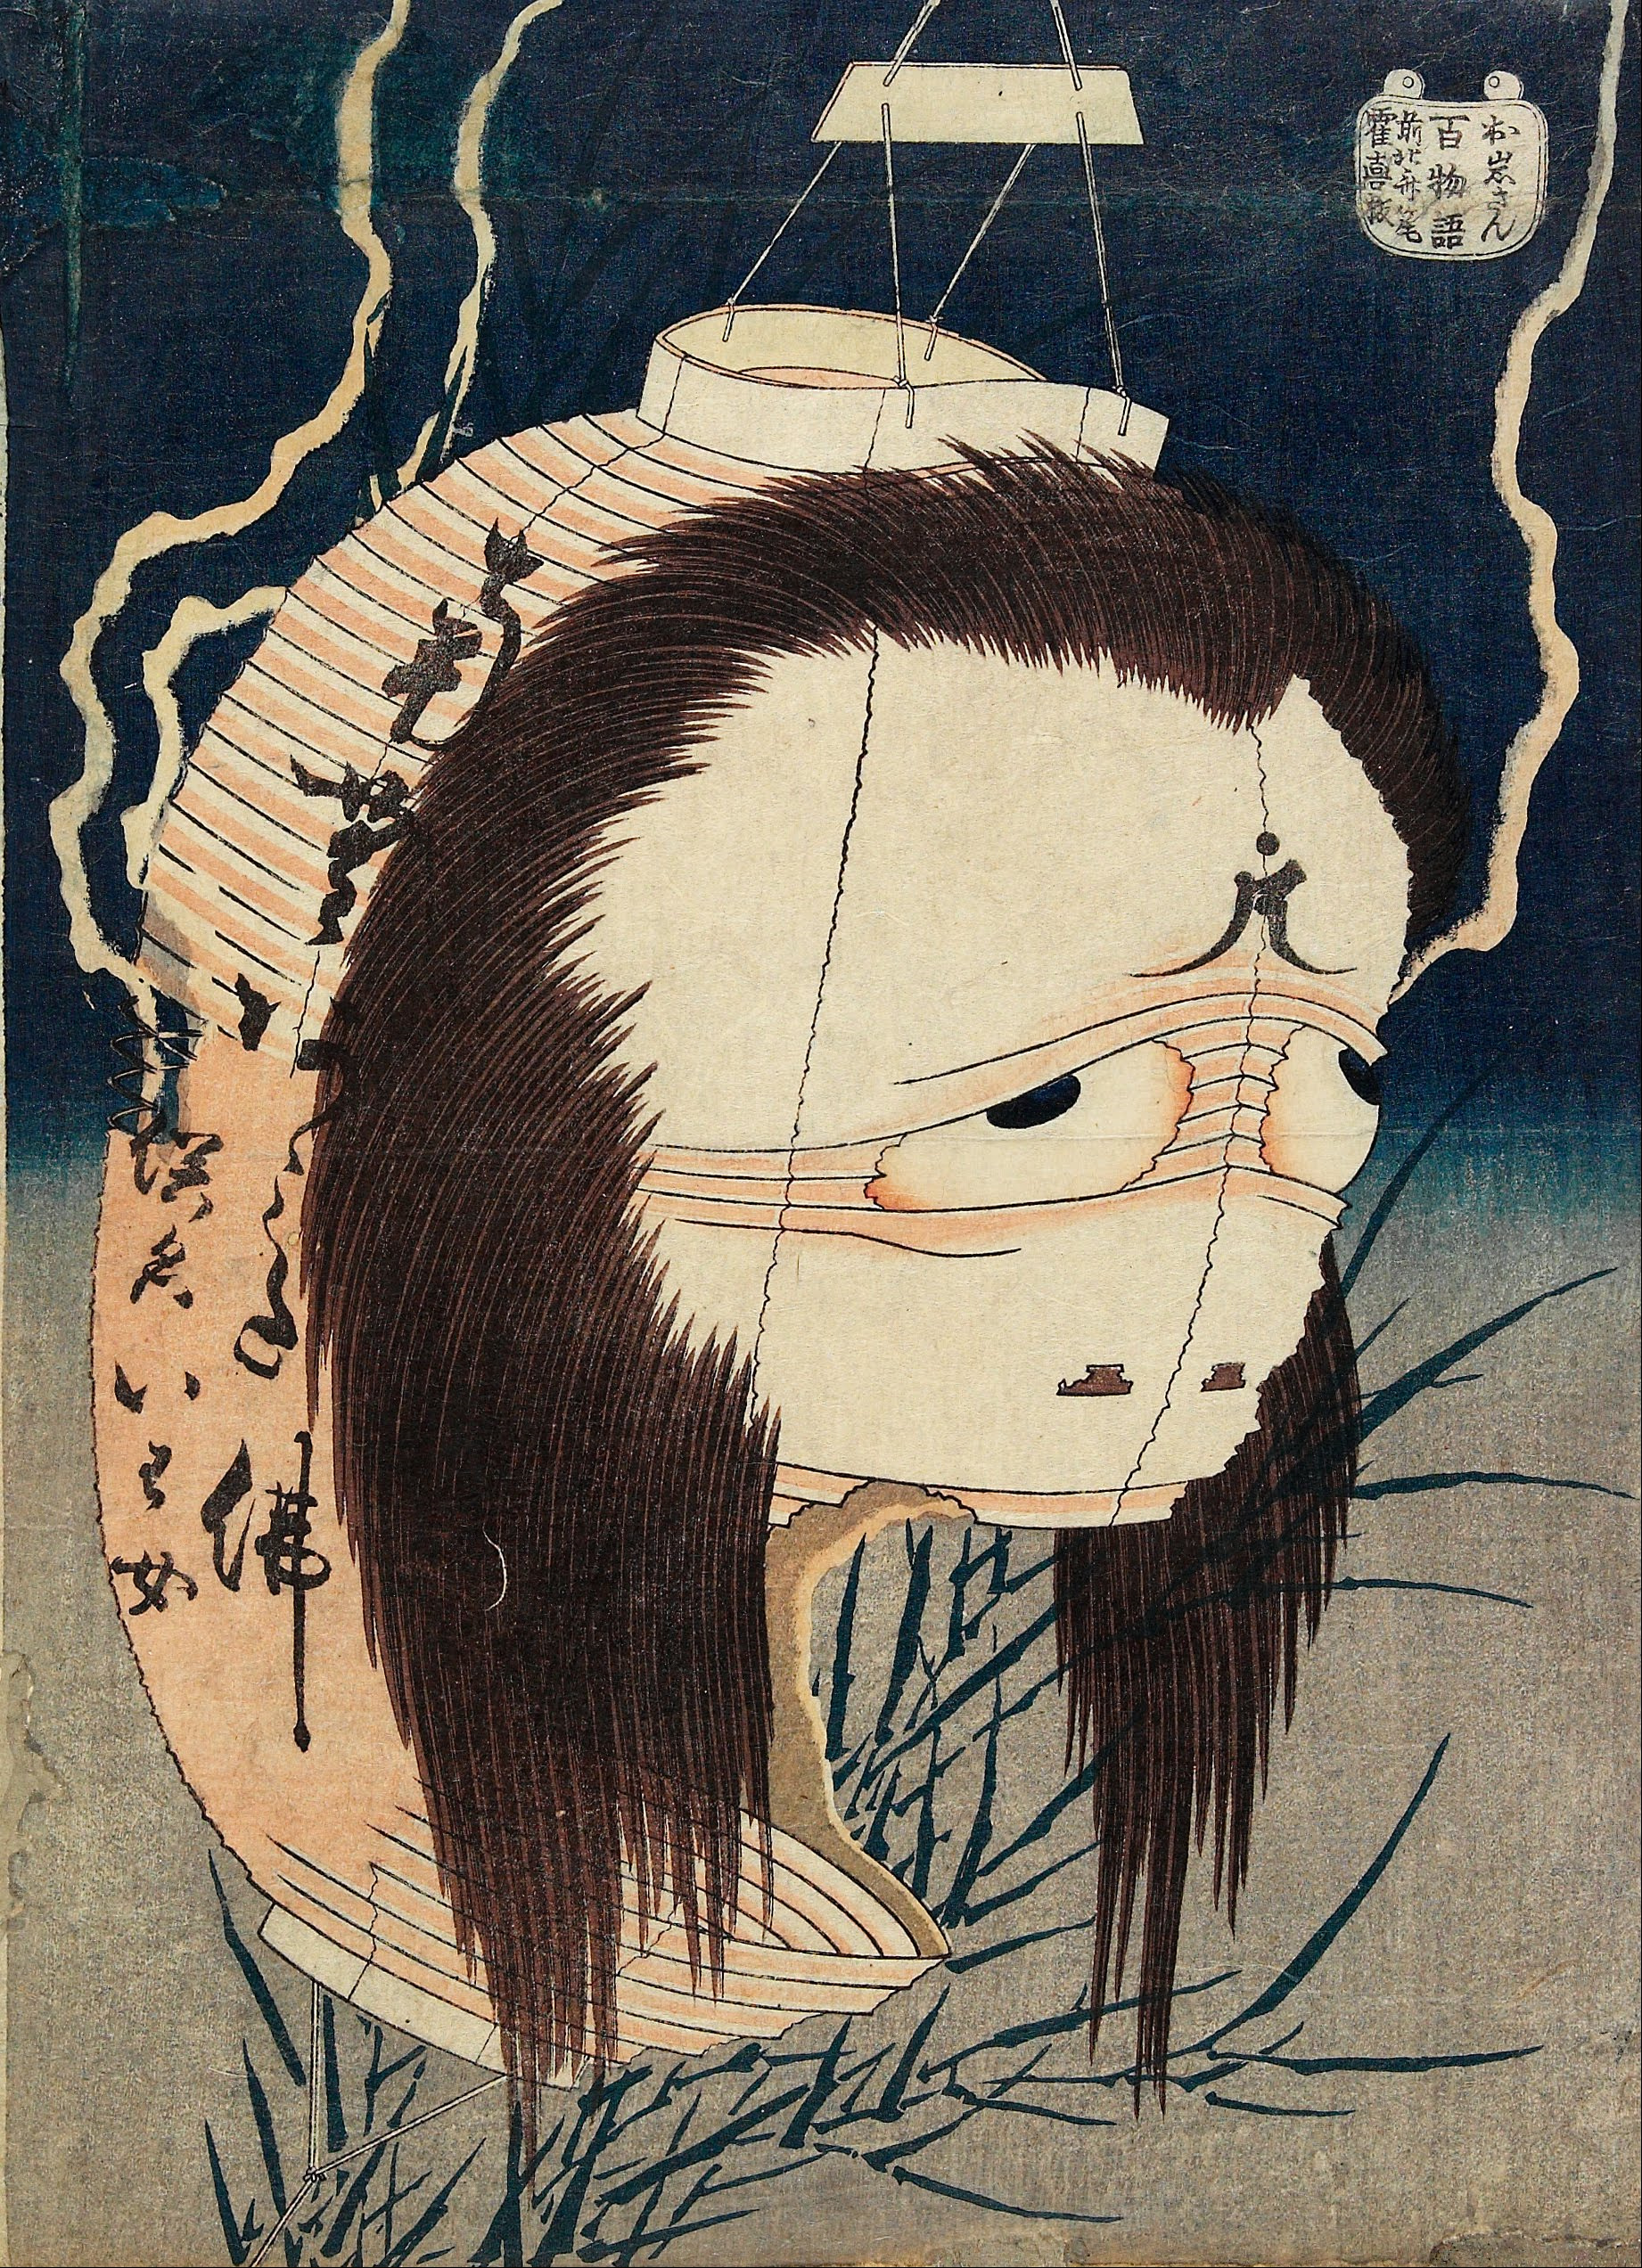 Der Laternengeist, Iwa by Katsushika Hokusai - ca. 1831-1832 - 26.4 x 18.9 cm Minneapolis Institute of Art